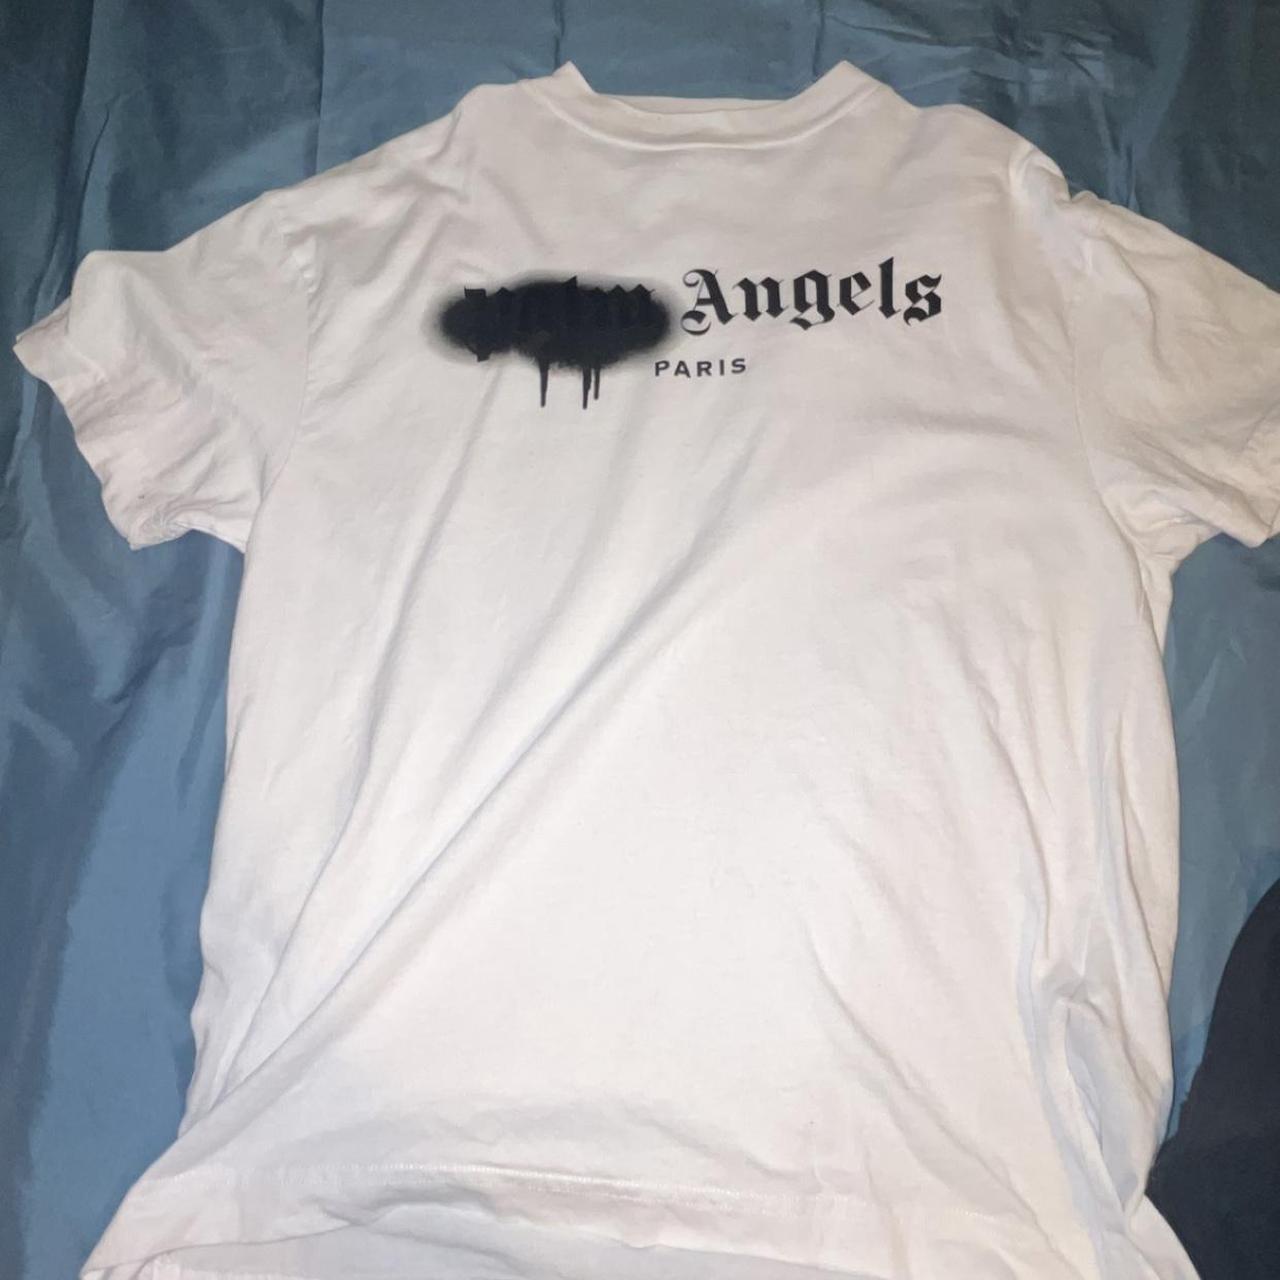 PALM ANGELS rhinestone sprayed hoodie Authentic- - Depop